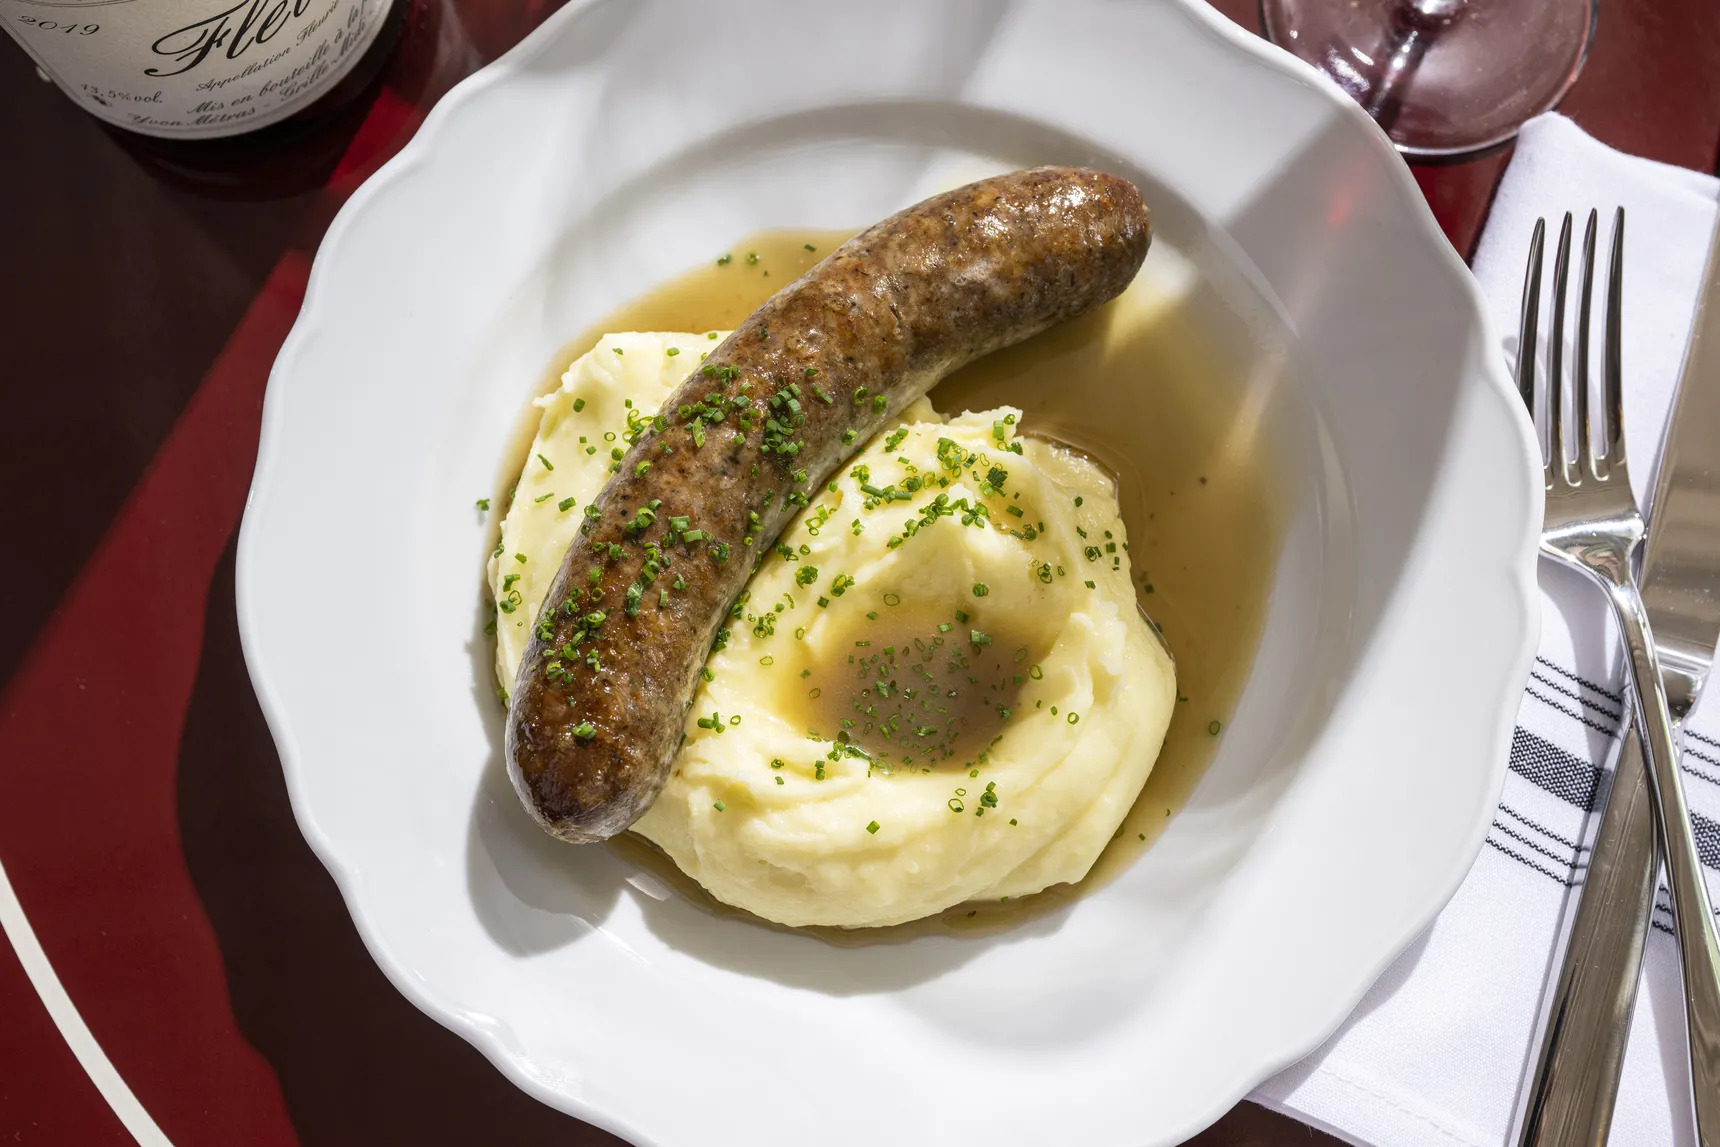 A dish with sausage and potatoes at Libertine.